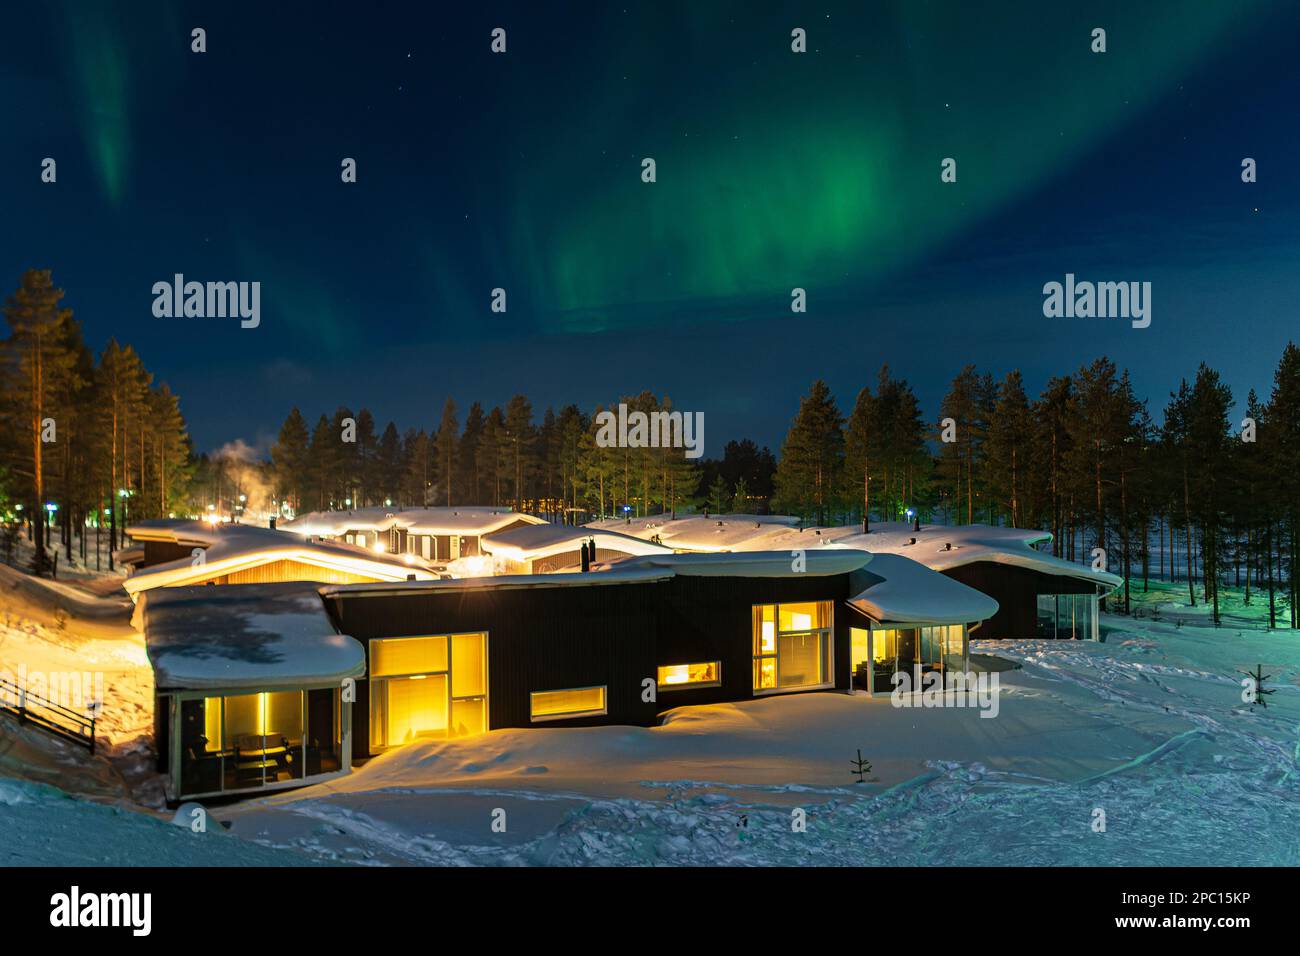 Aurora Over Huts In Winter In Kuusamo, Finland. Stock Photo